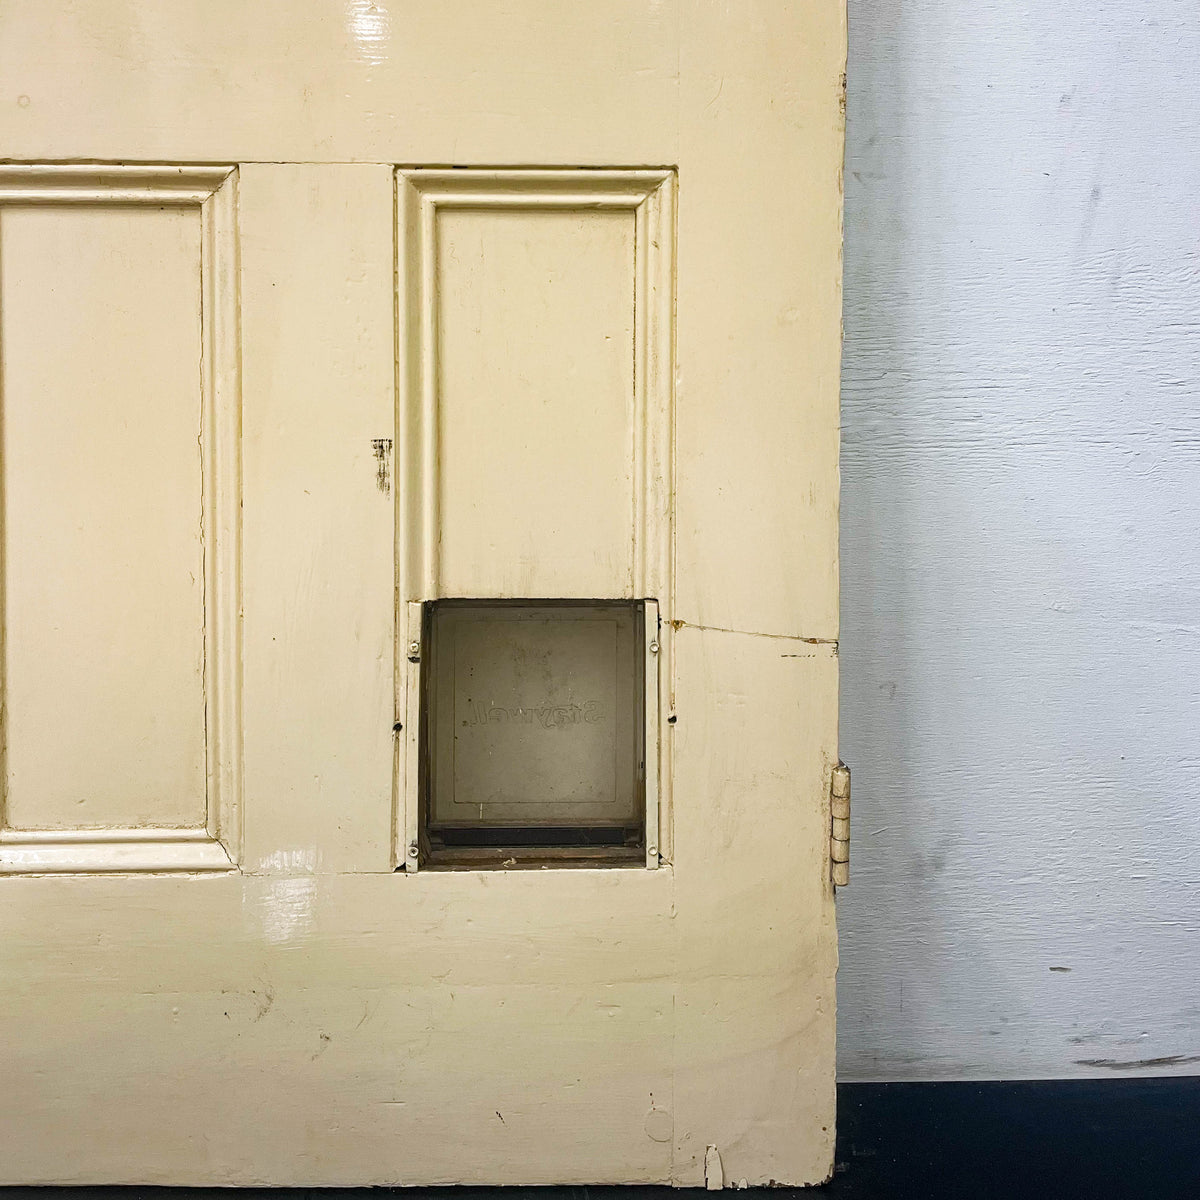 Antique 2 Panel Glazed Victorian Pine Door - 192cm x 70.5cm | The Architectural Forum